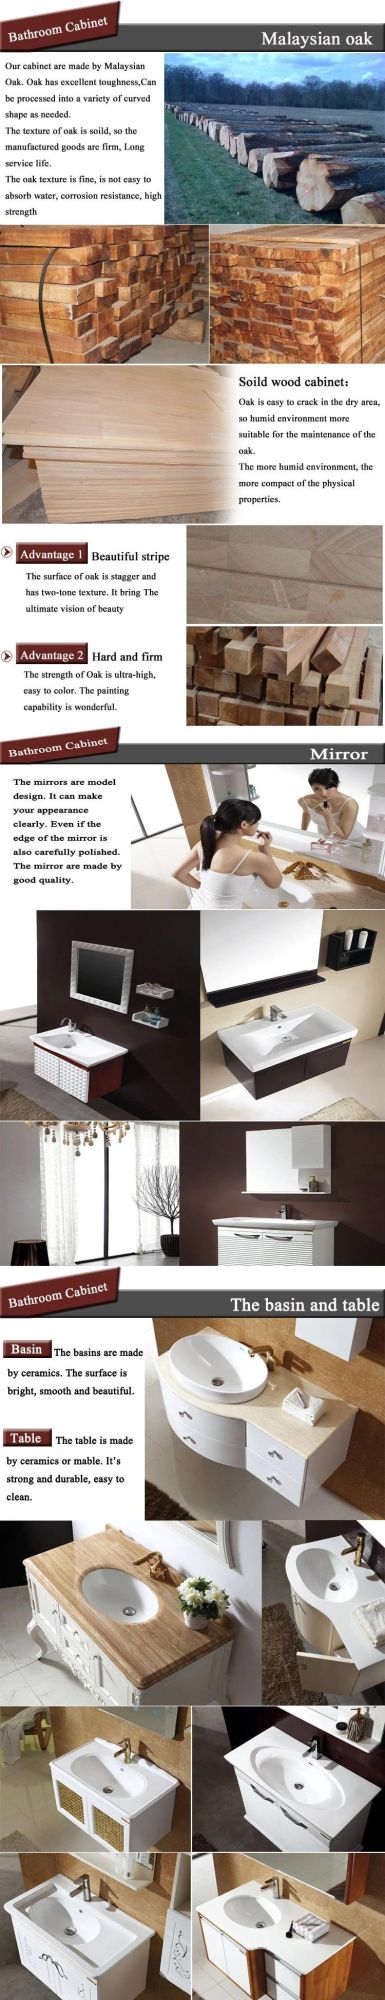 European Luxury Design Marble Countertop Bathroom Vanity Cabinets Modern Bath Room Furniture